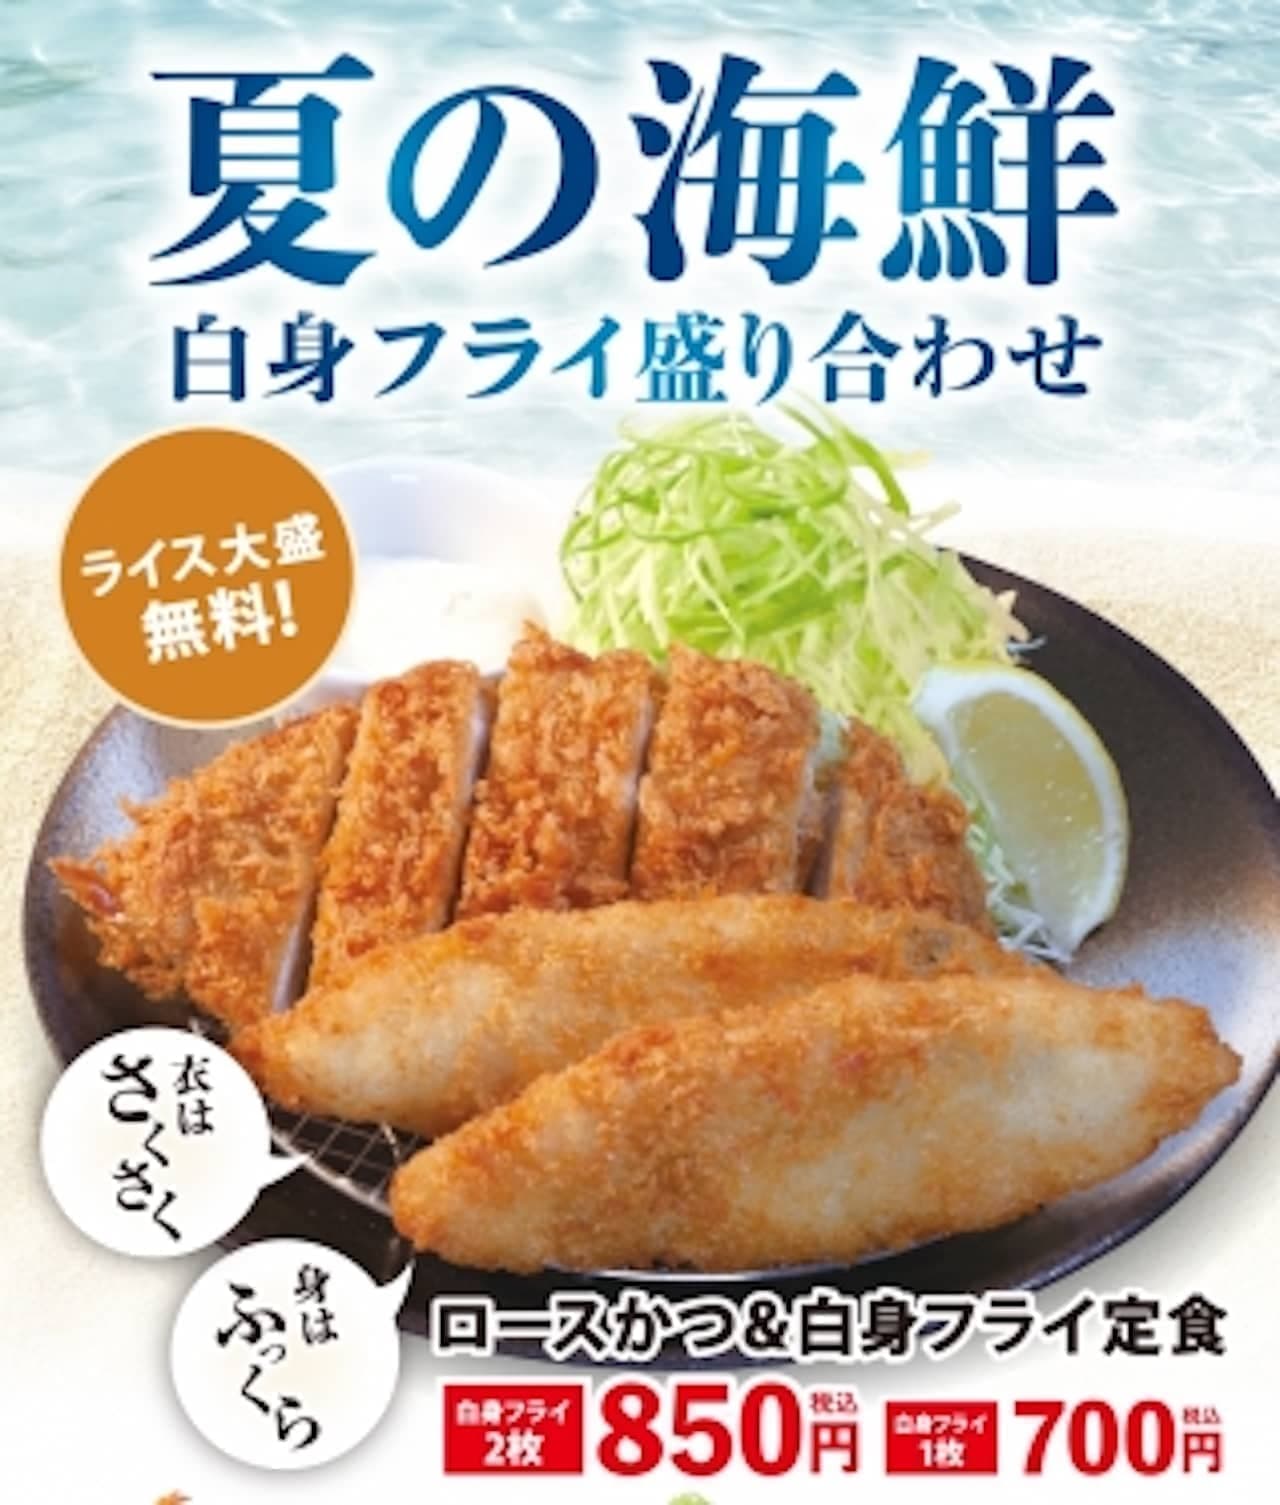 Matsunoya "Fried white meat set meal"